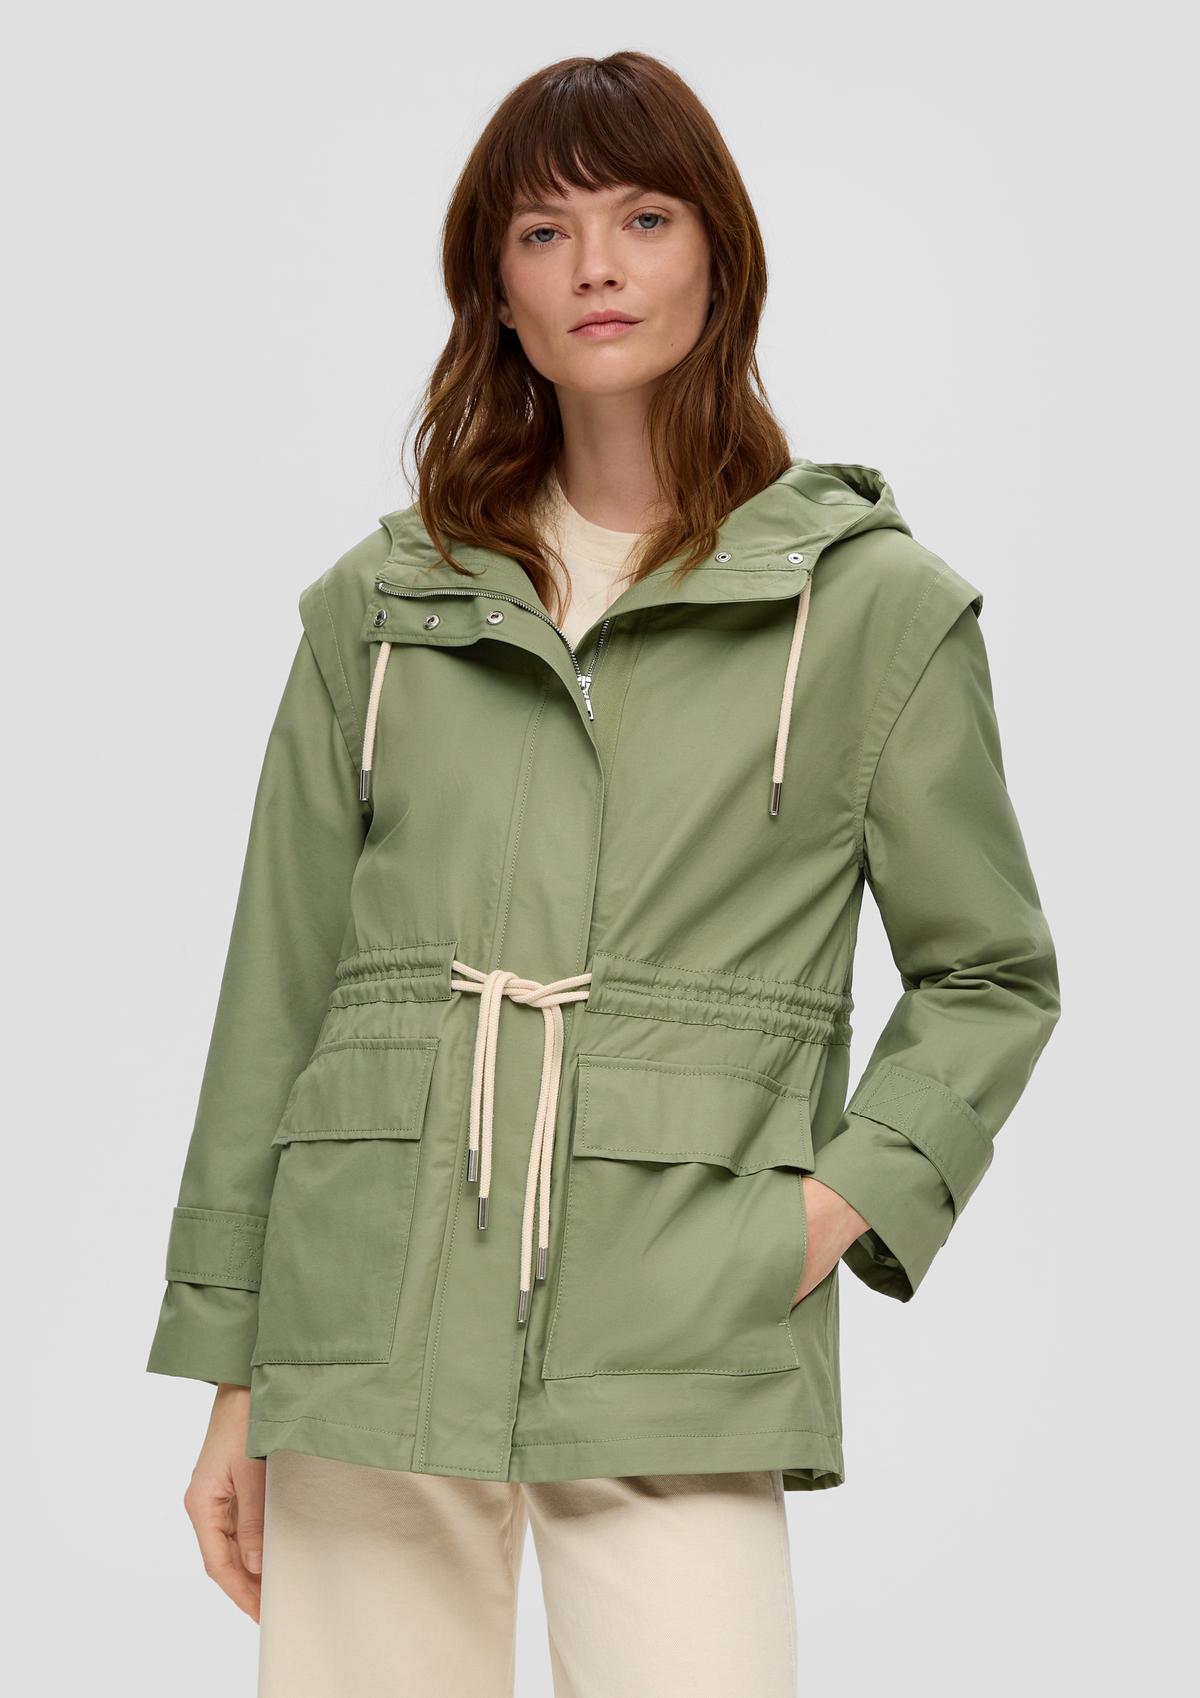 Buy women's light jackets online now